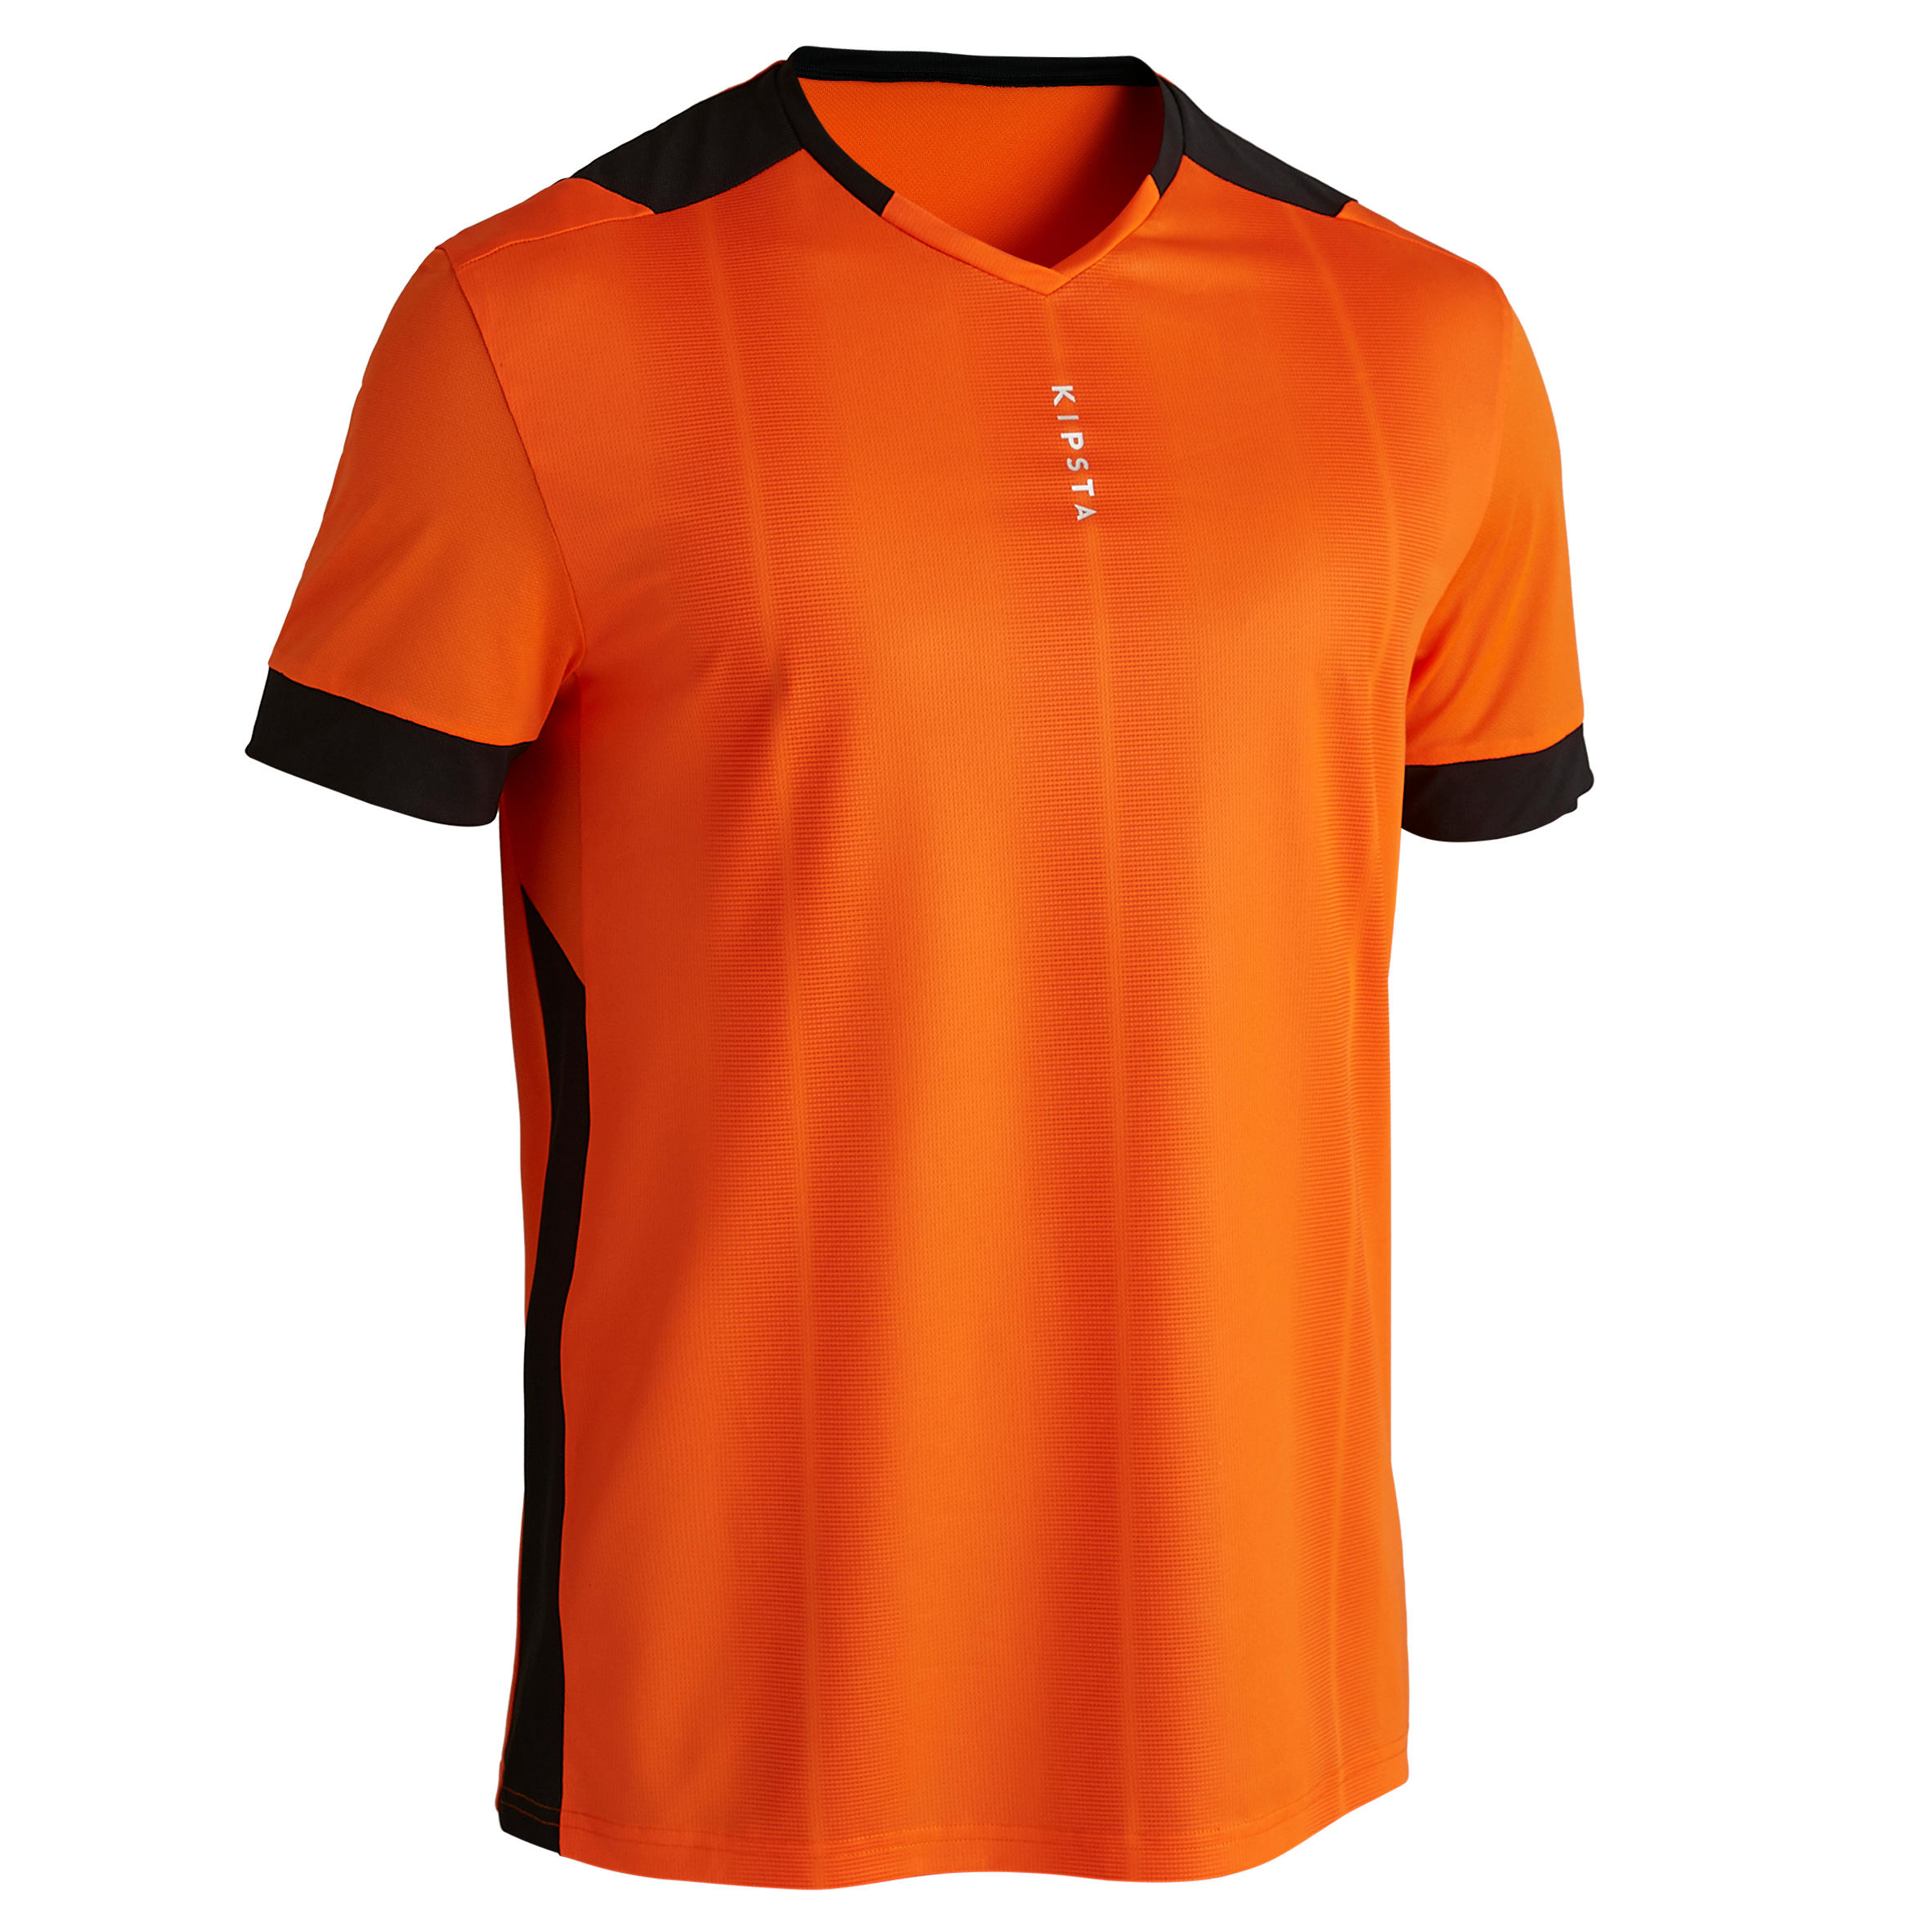 KIPSTA F500 Adult Football Jersey - Orange